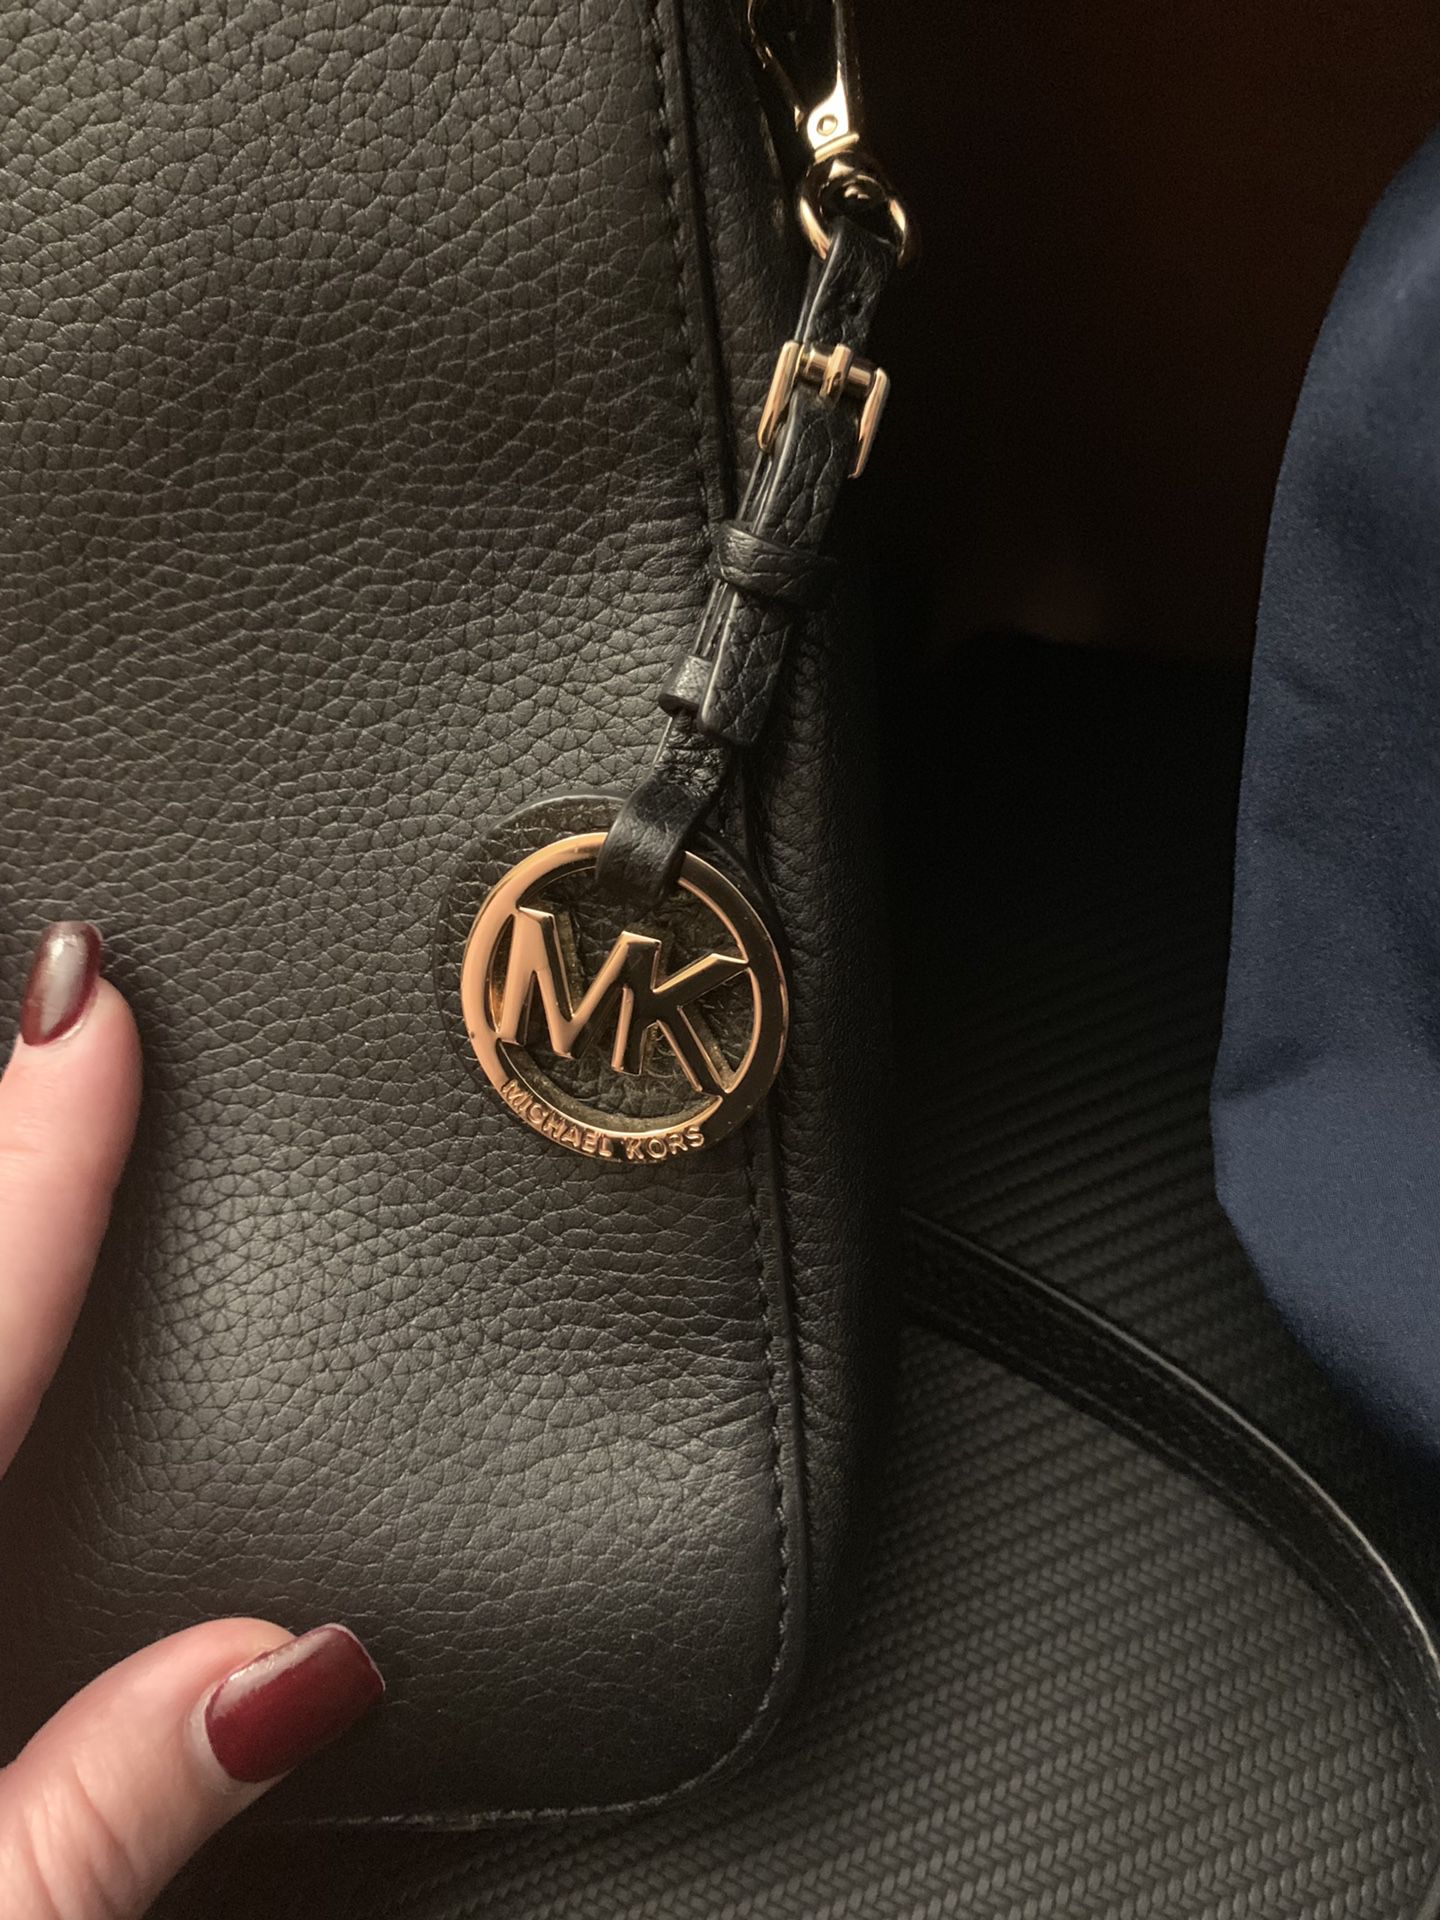 Michael Kors Black/Gold Crossbody purse